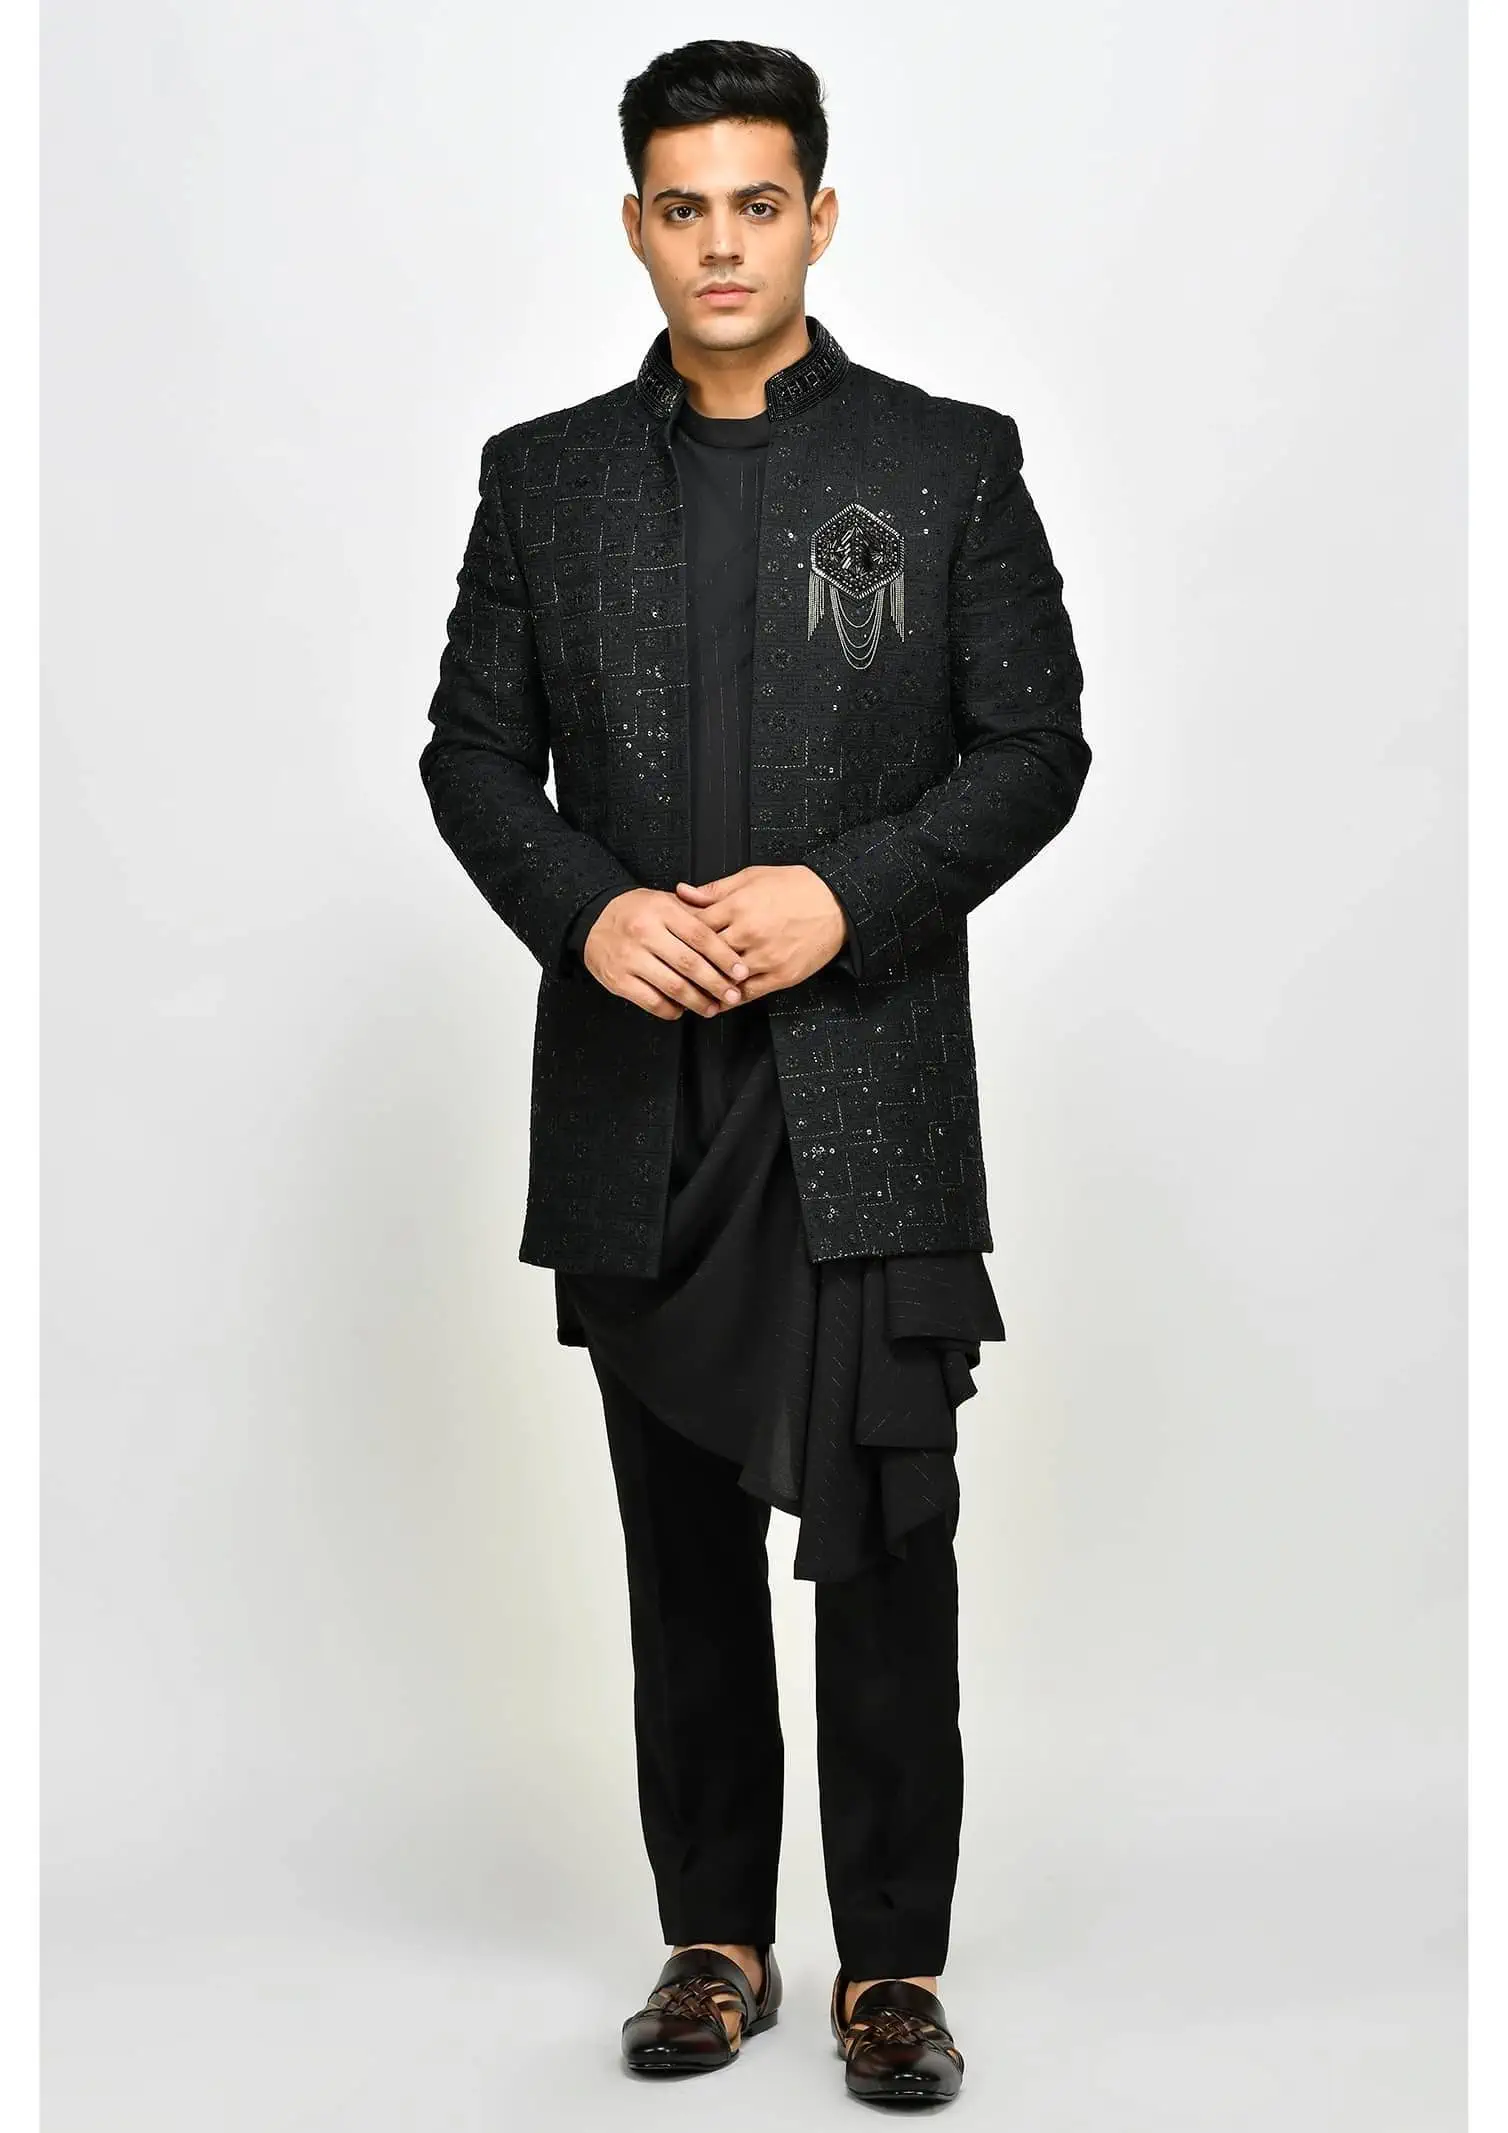 Sleeveless Jackets - Buy Sleeveless Jackets Online Starting at Just ₹246 |  Meesho